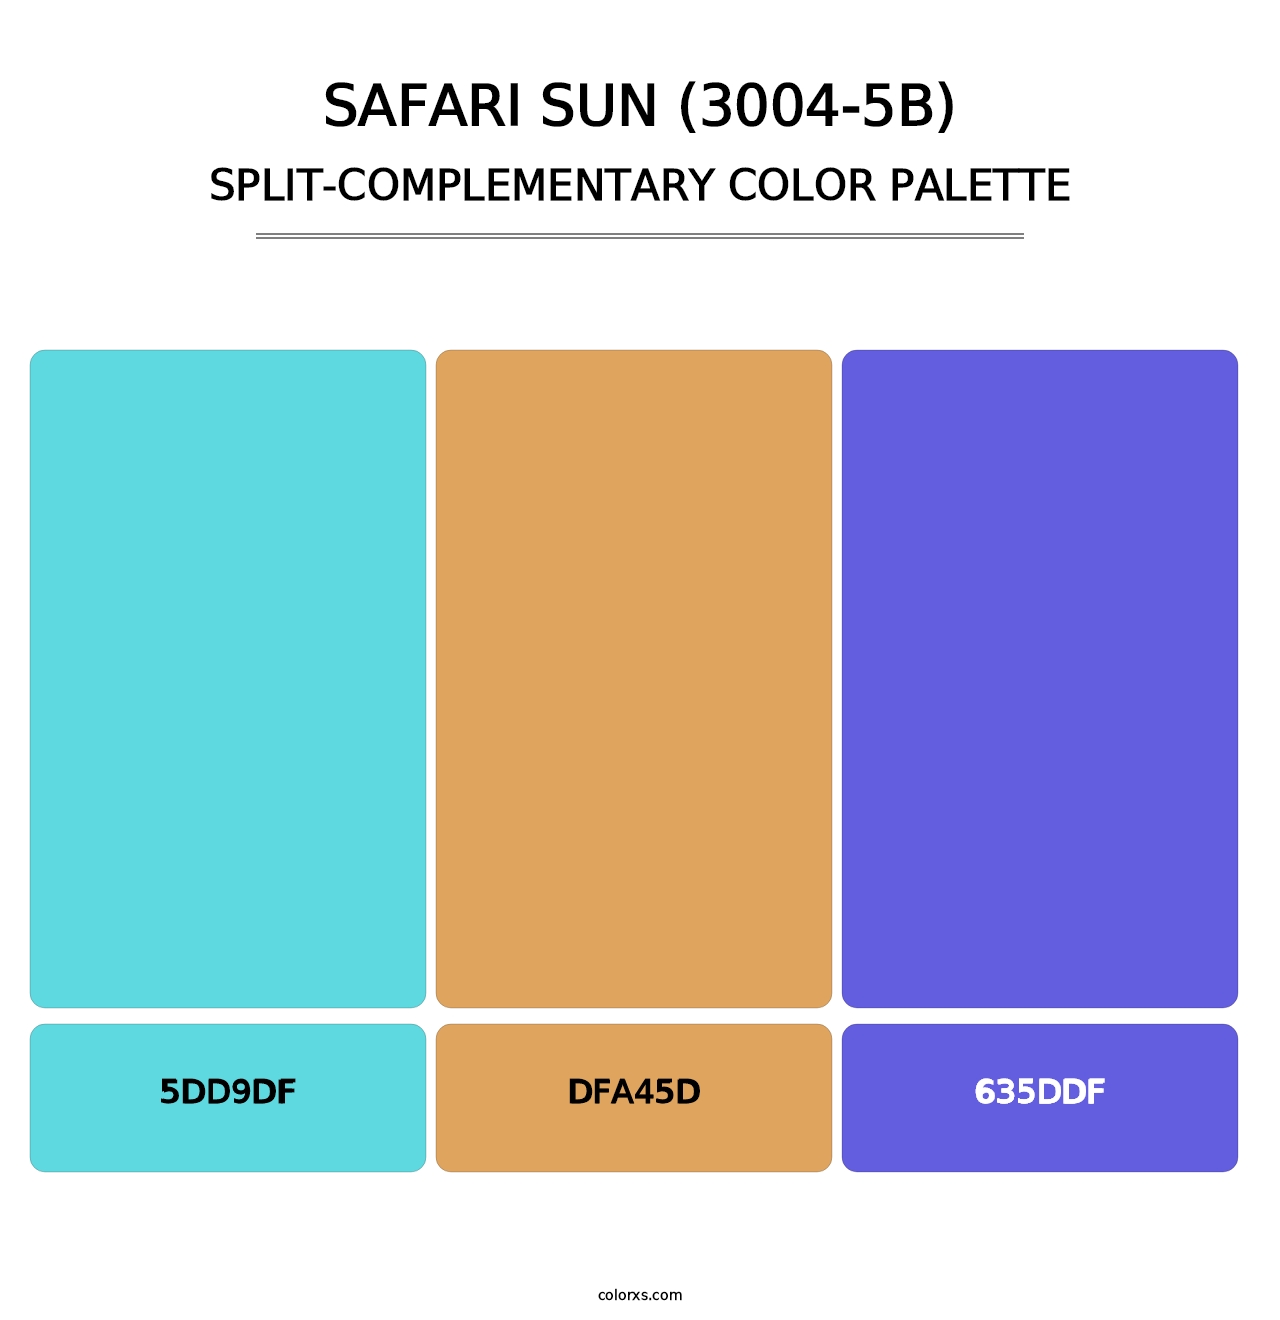 Safari Sun (3004-5B) - Split-Complementary Color Palette